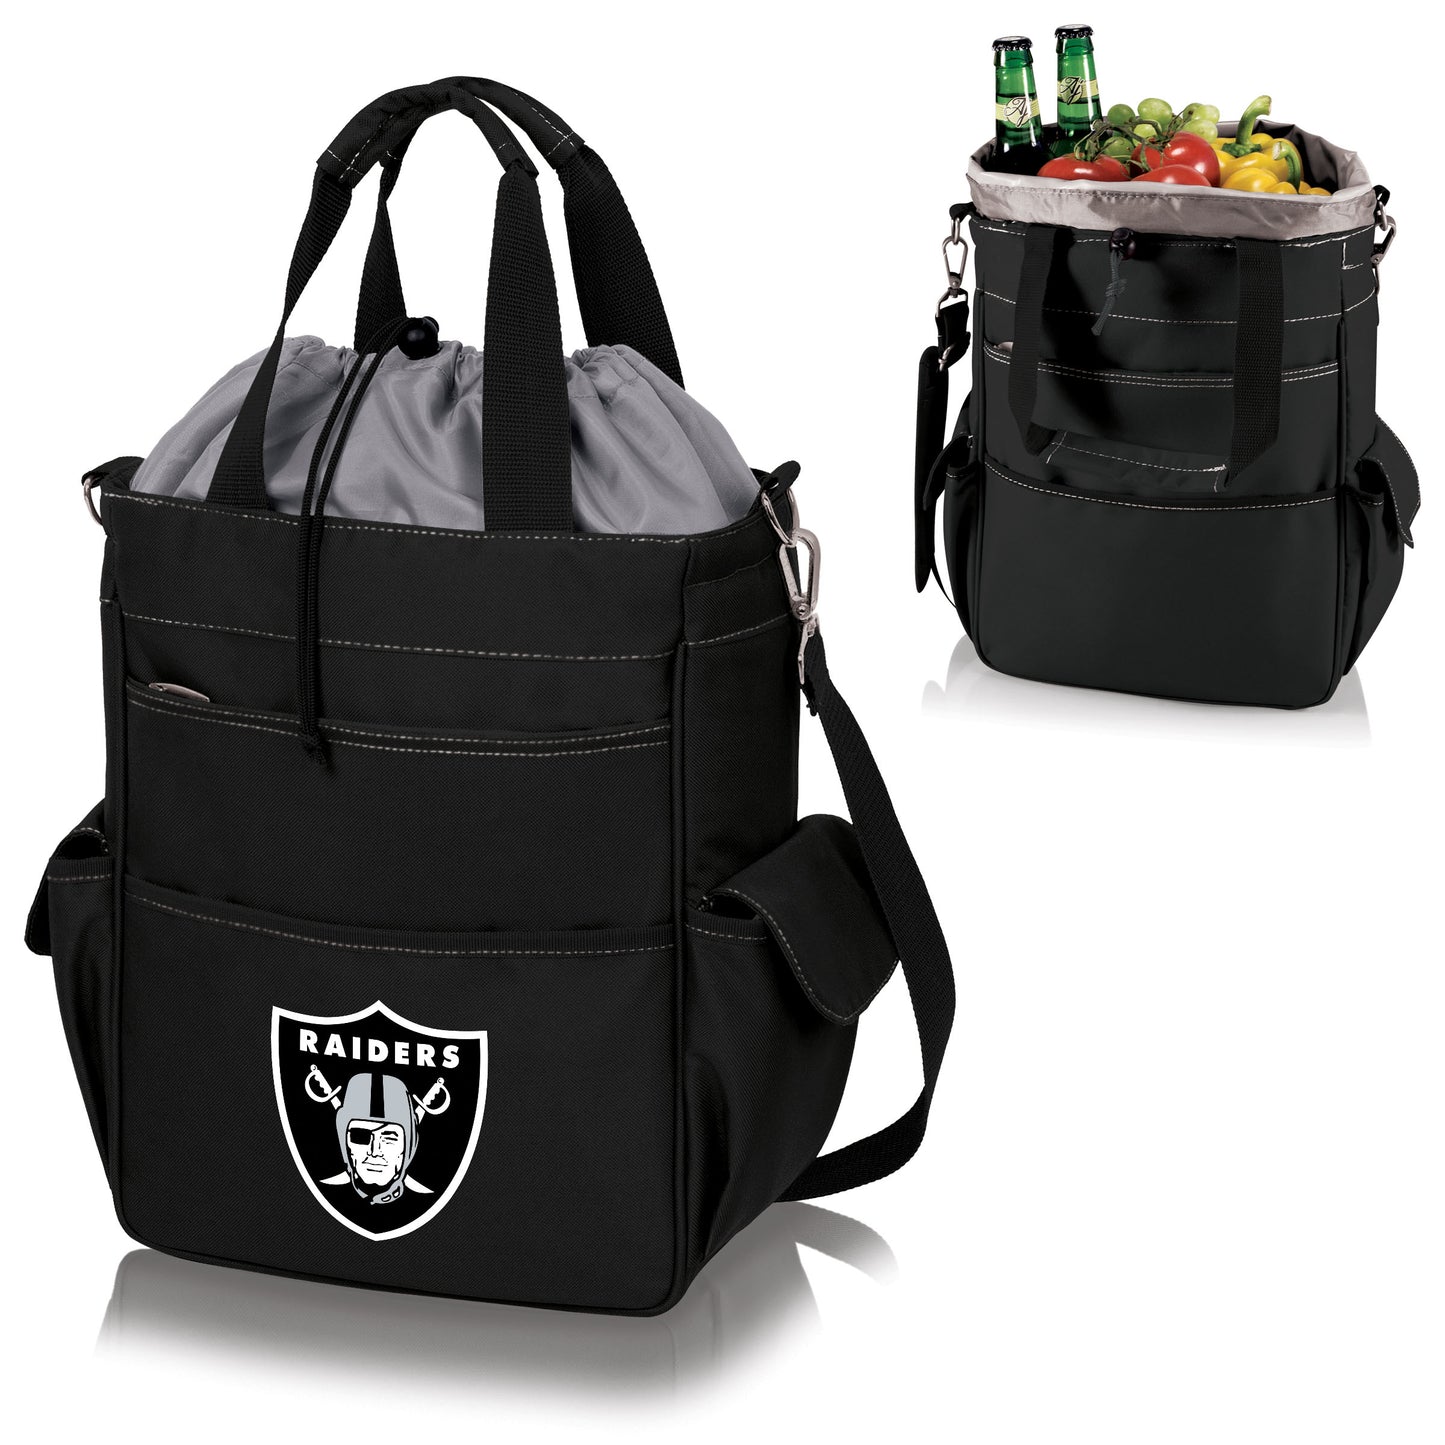 Las Vegas Raiders Activo Cooler Tote Bag, (Black with Gray Accents)